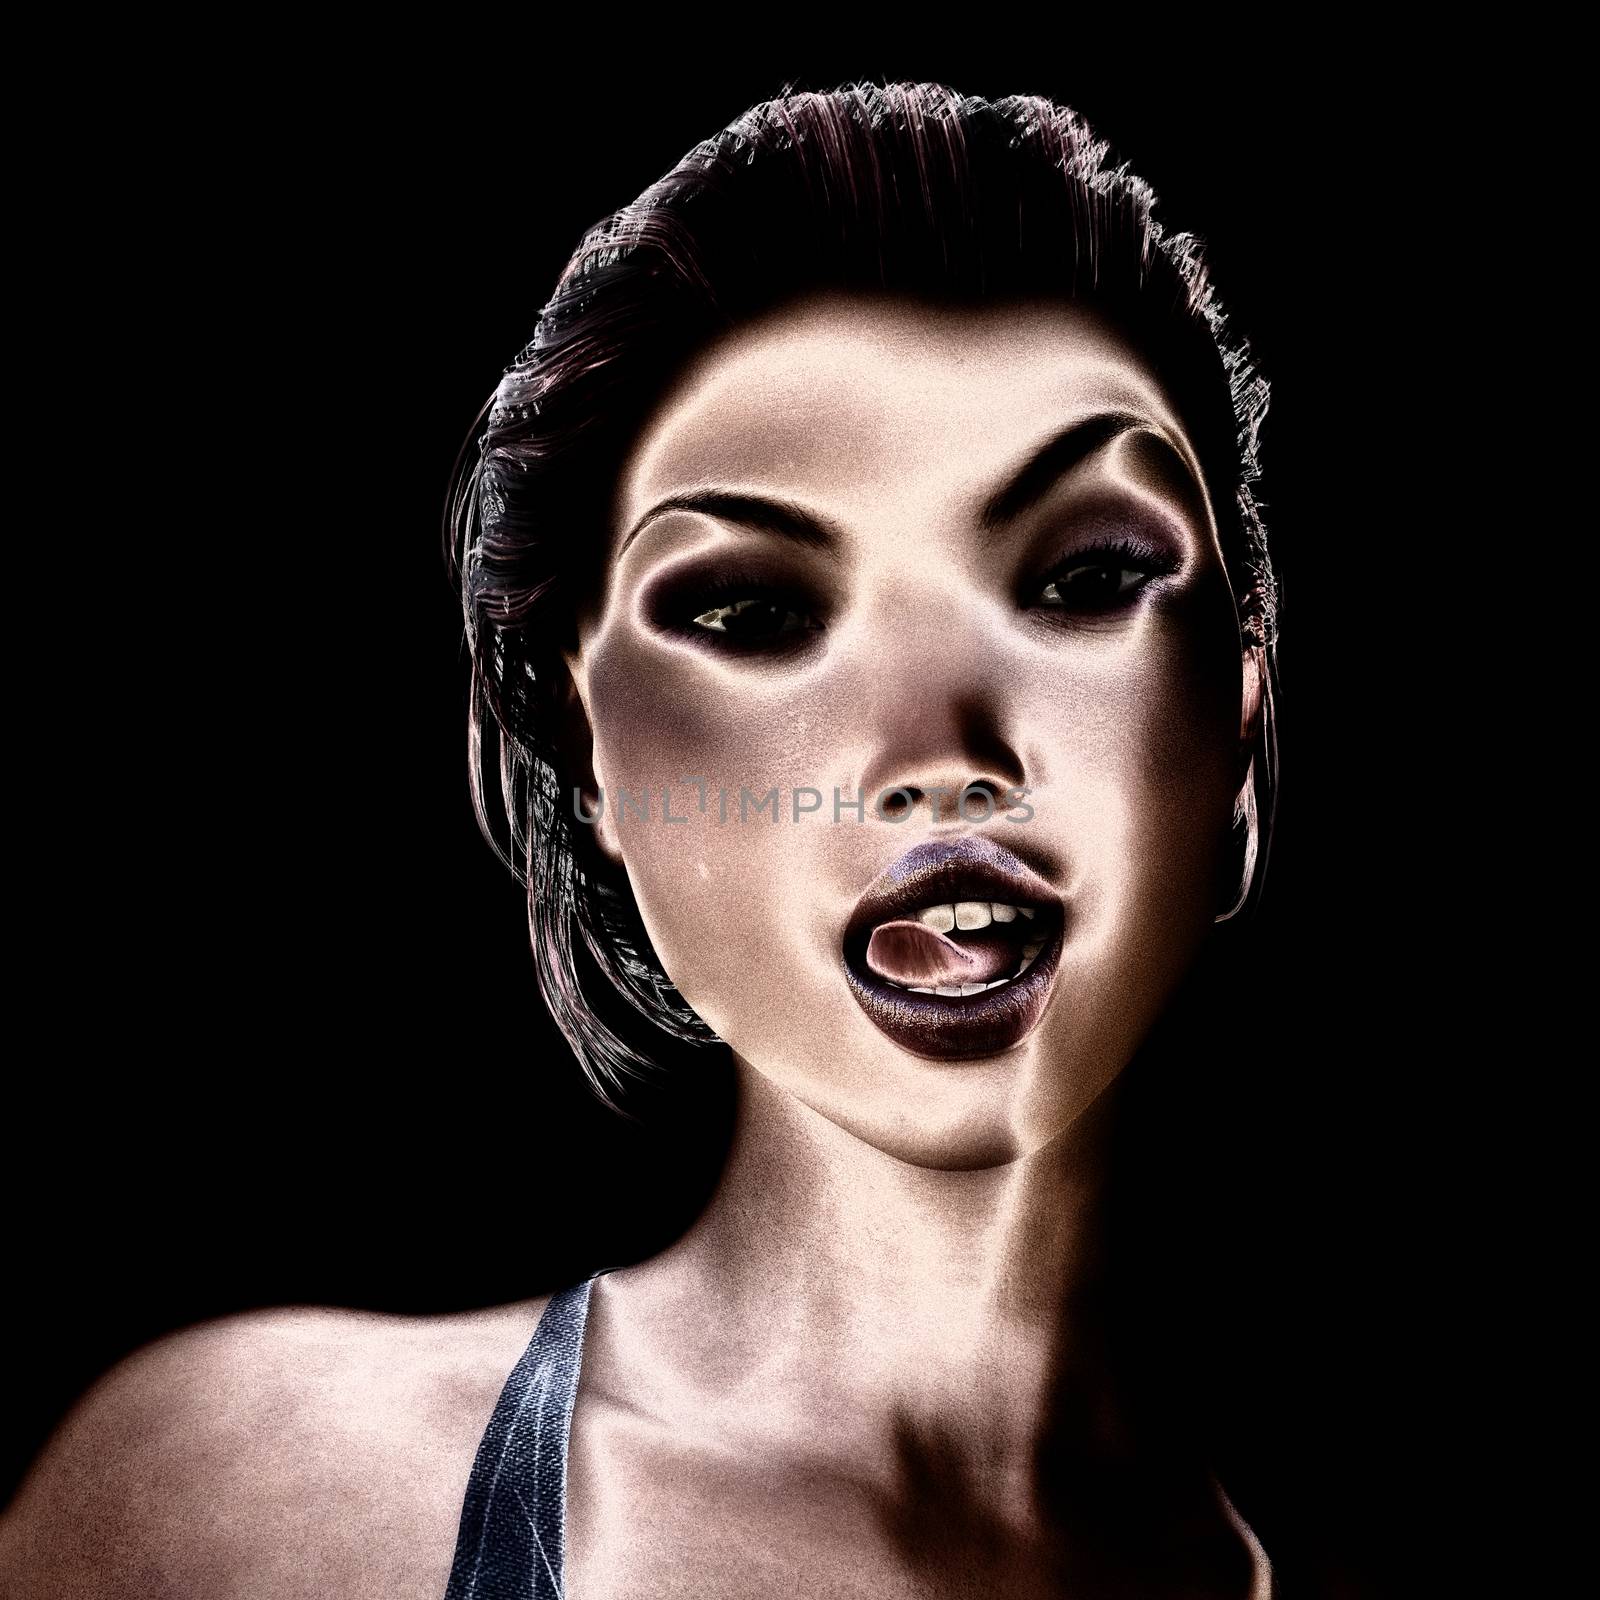 Digital 3D Illustration of a facial Expression